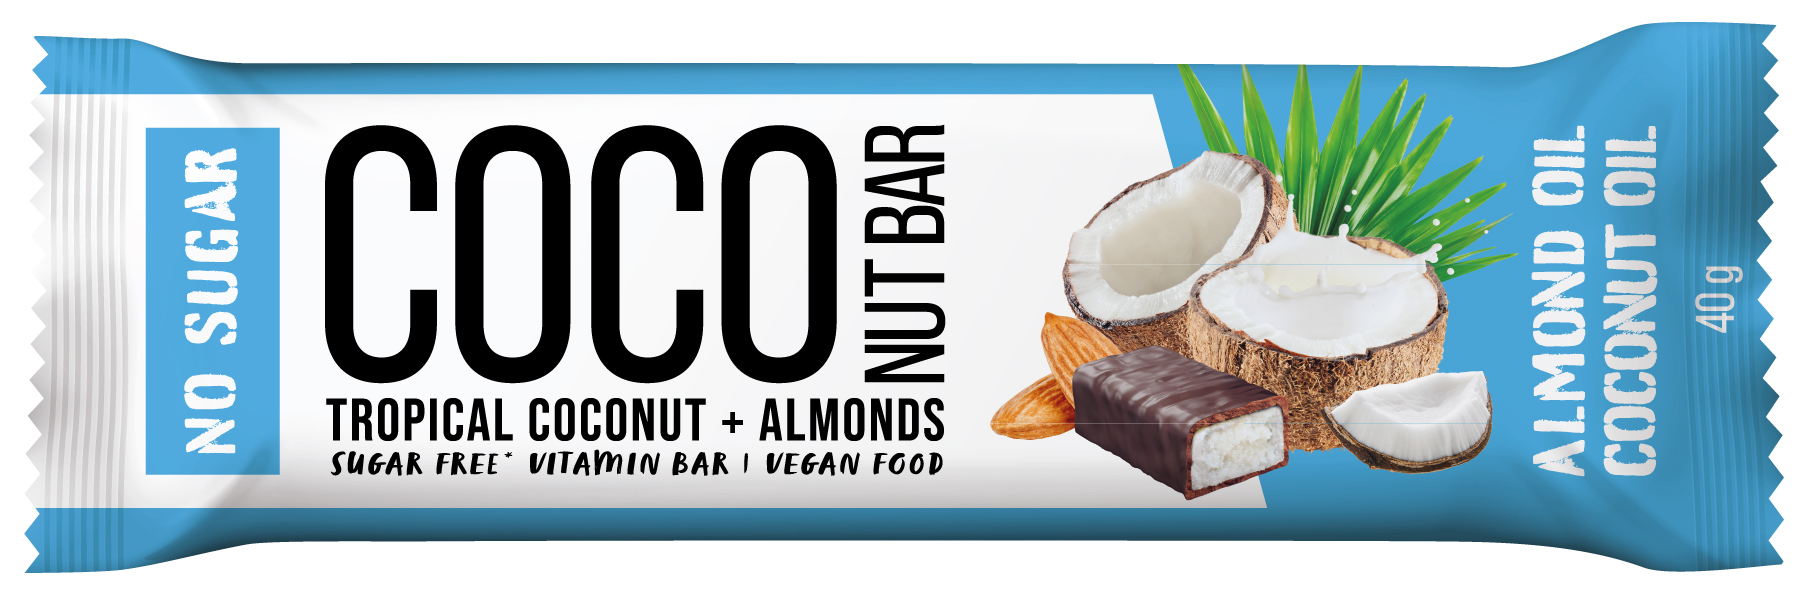 Coconut bar in chocolate glaze with almonds